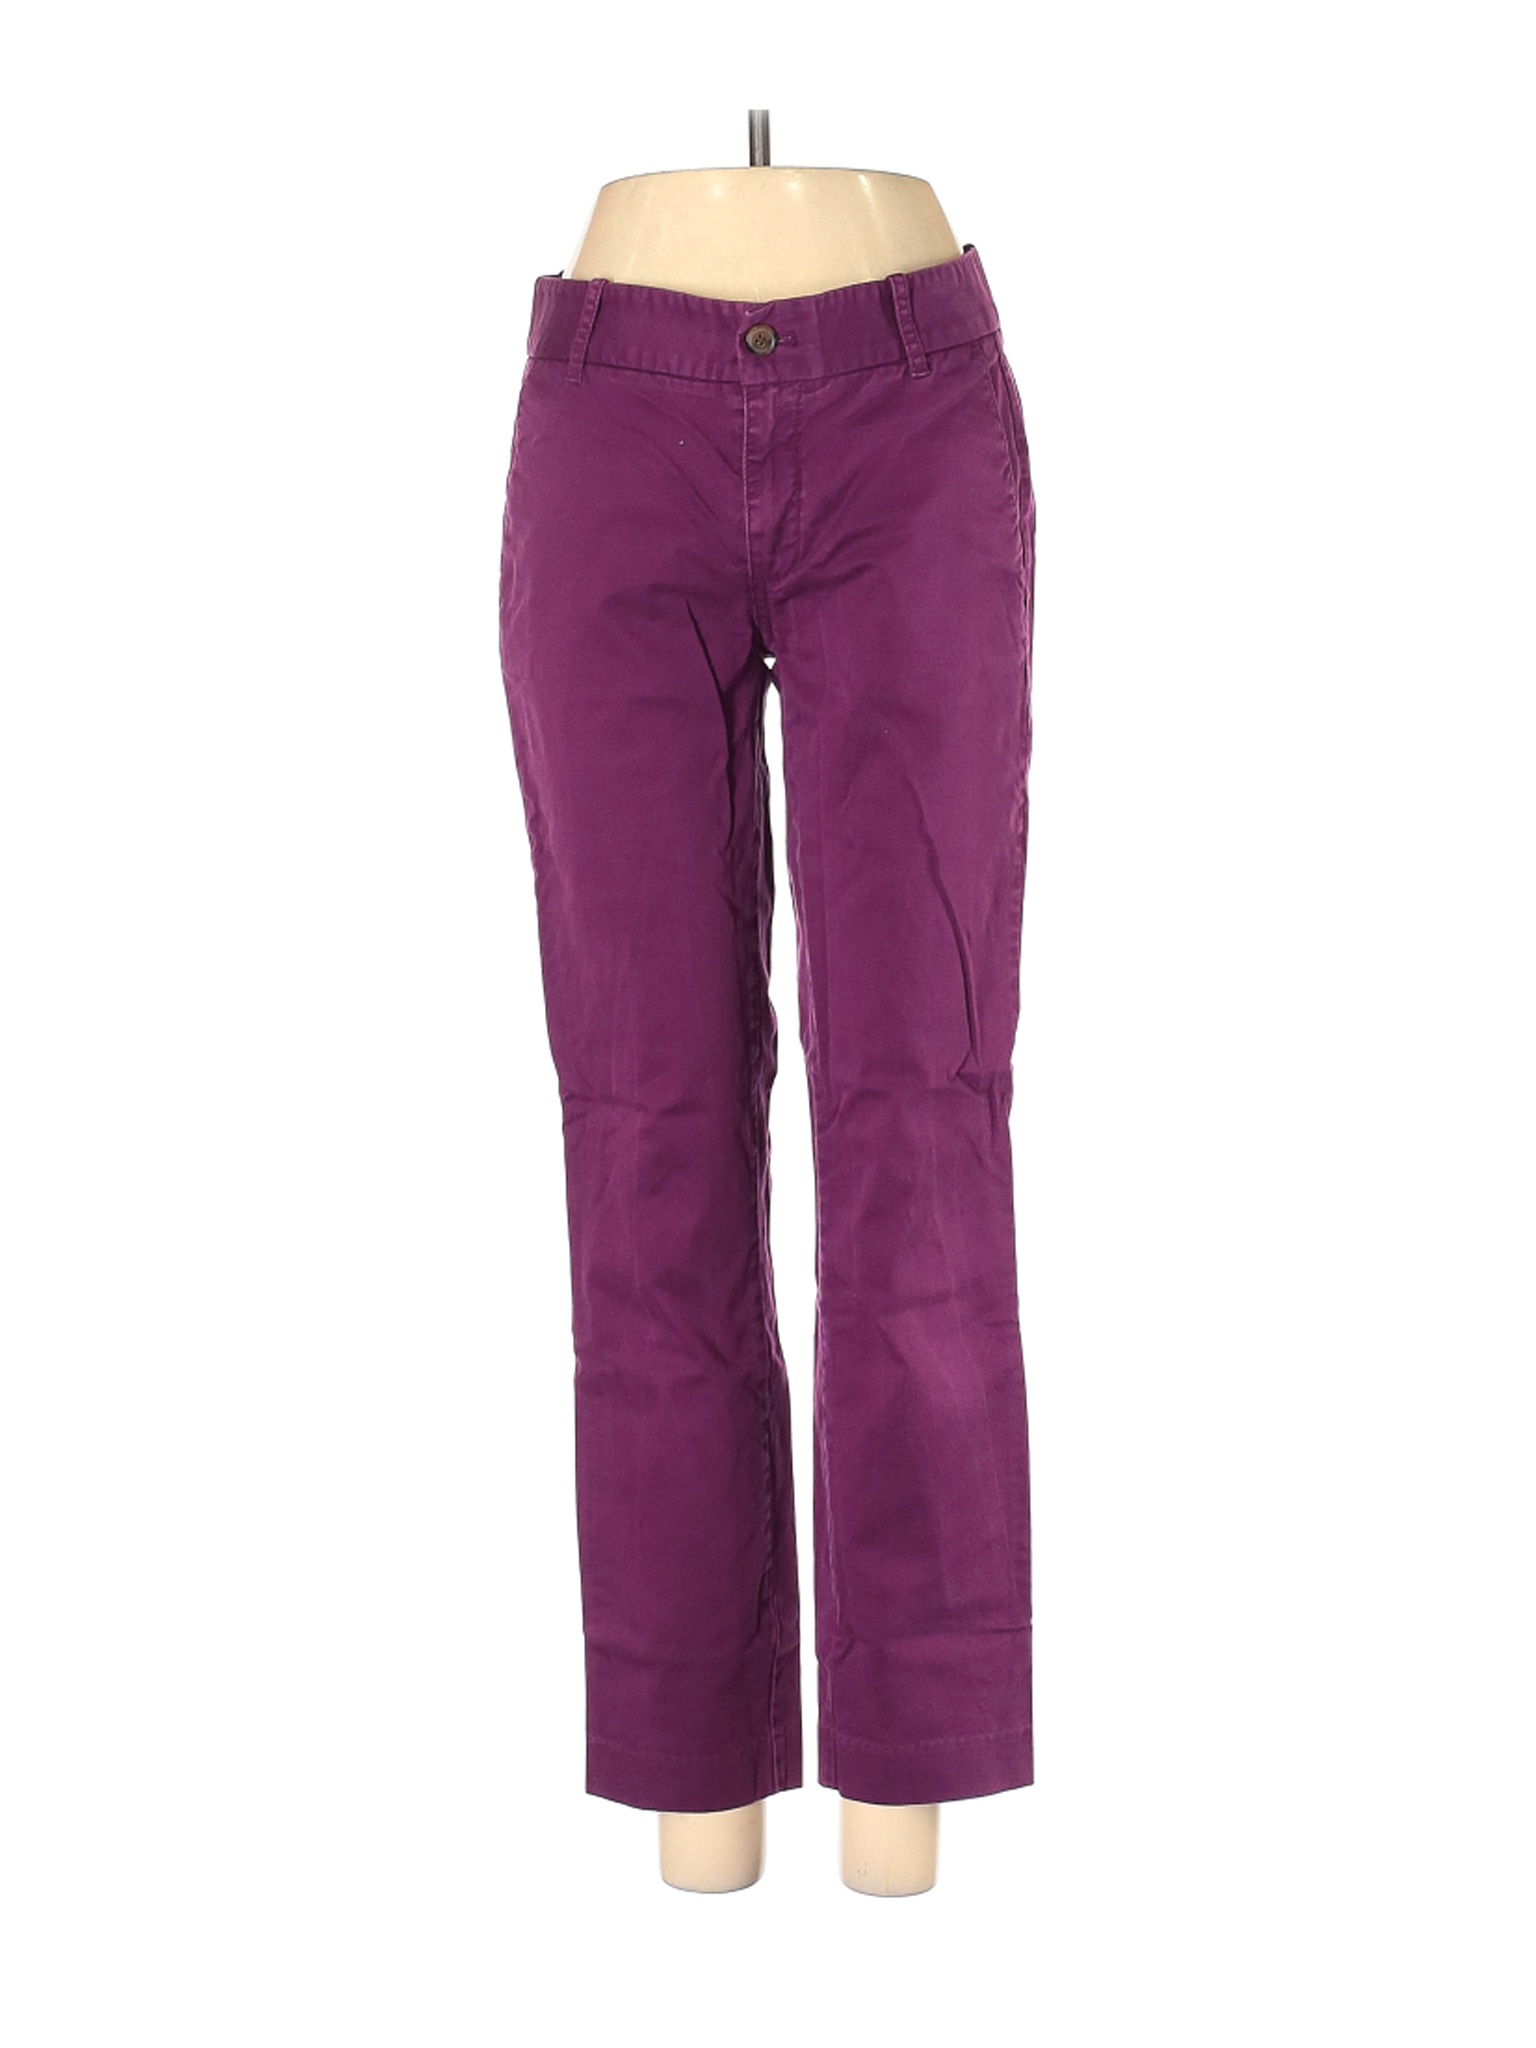 J.Crew Factory Store Women Purple Khakis 2 | eBay